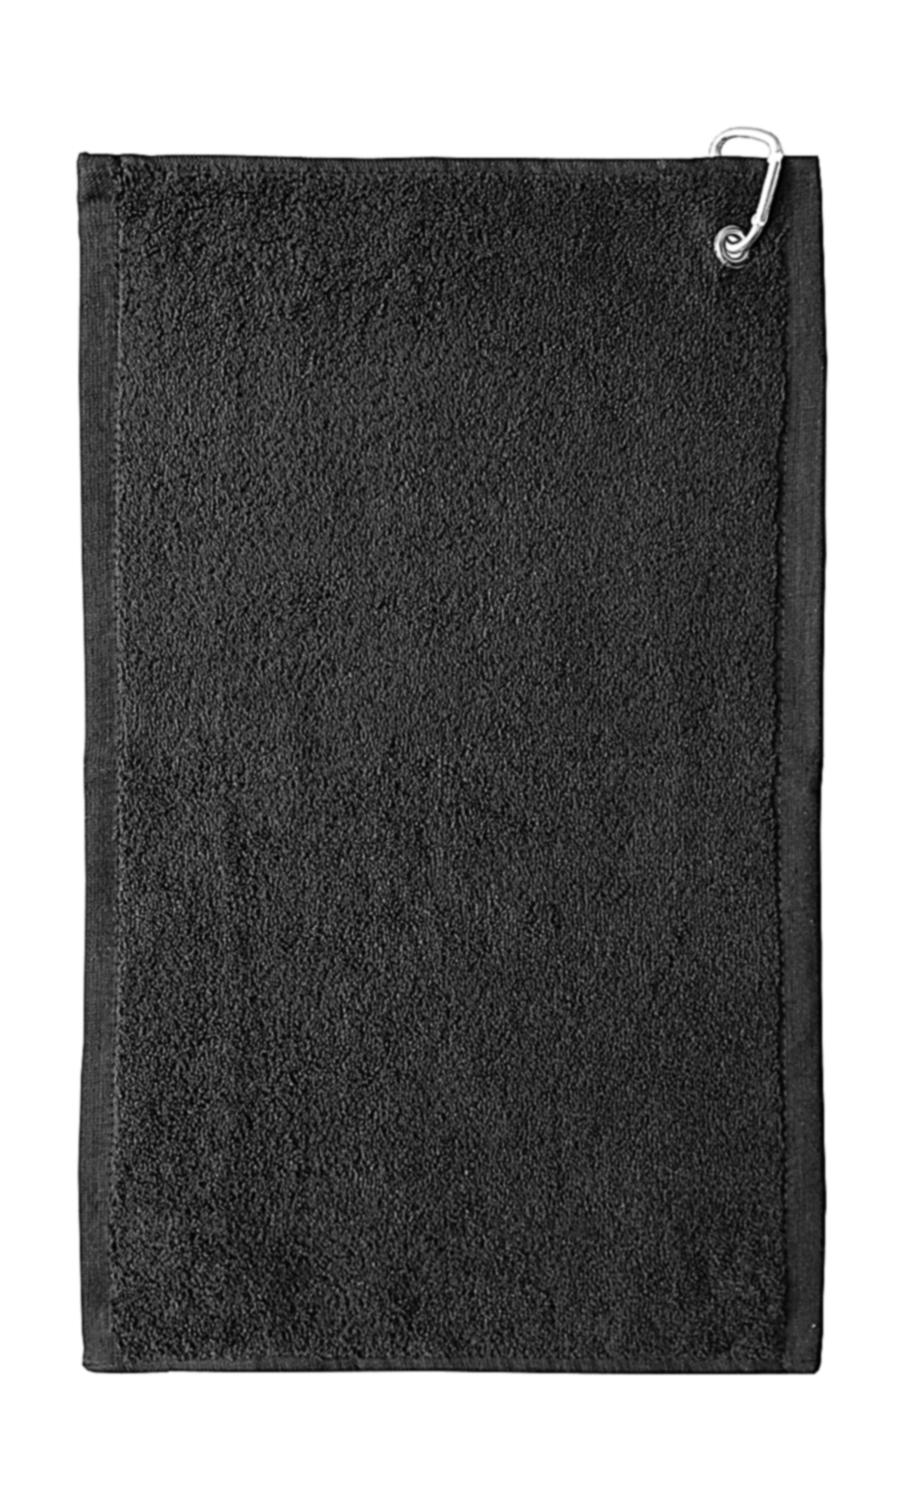  Thames Golf Towel 30x50 cm in Farbe Black